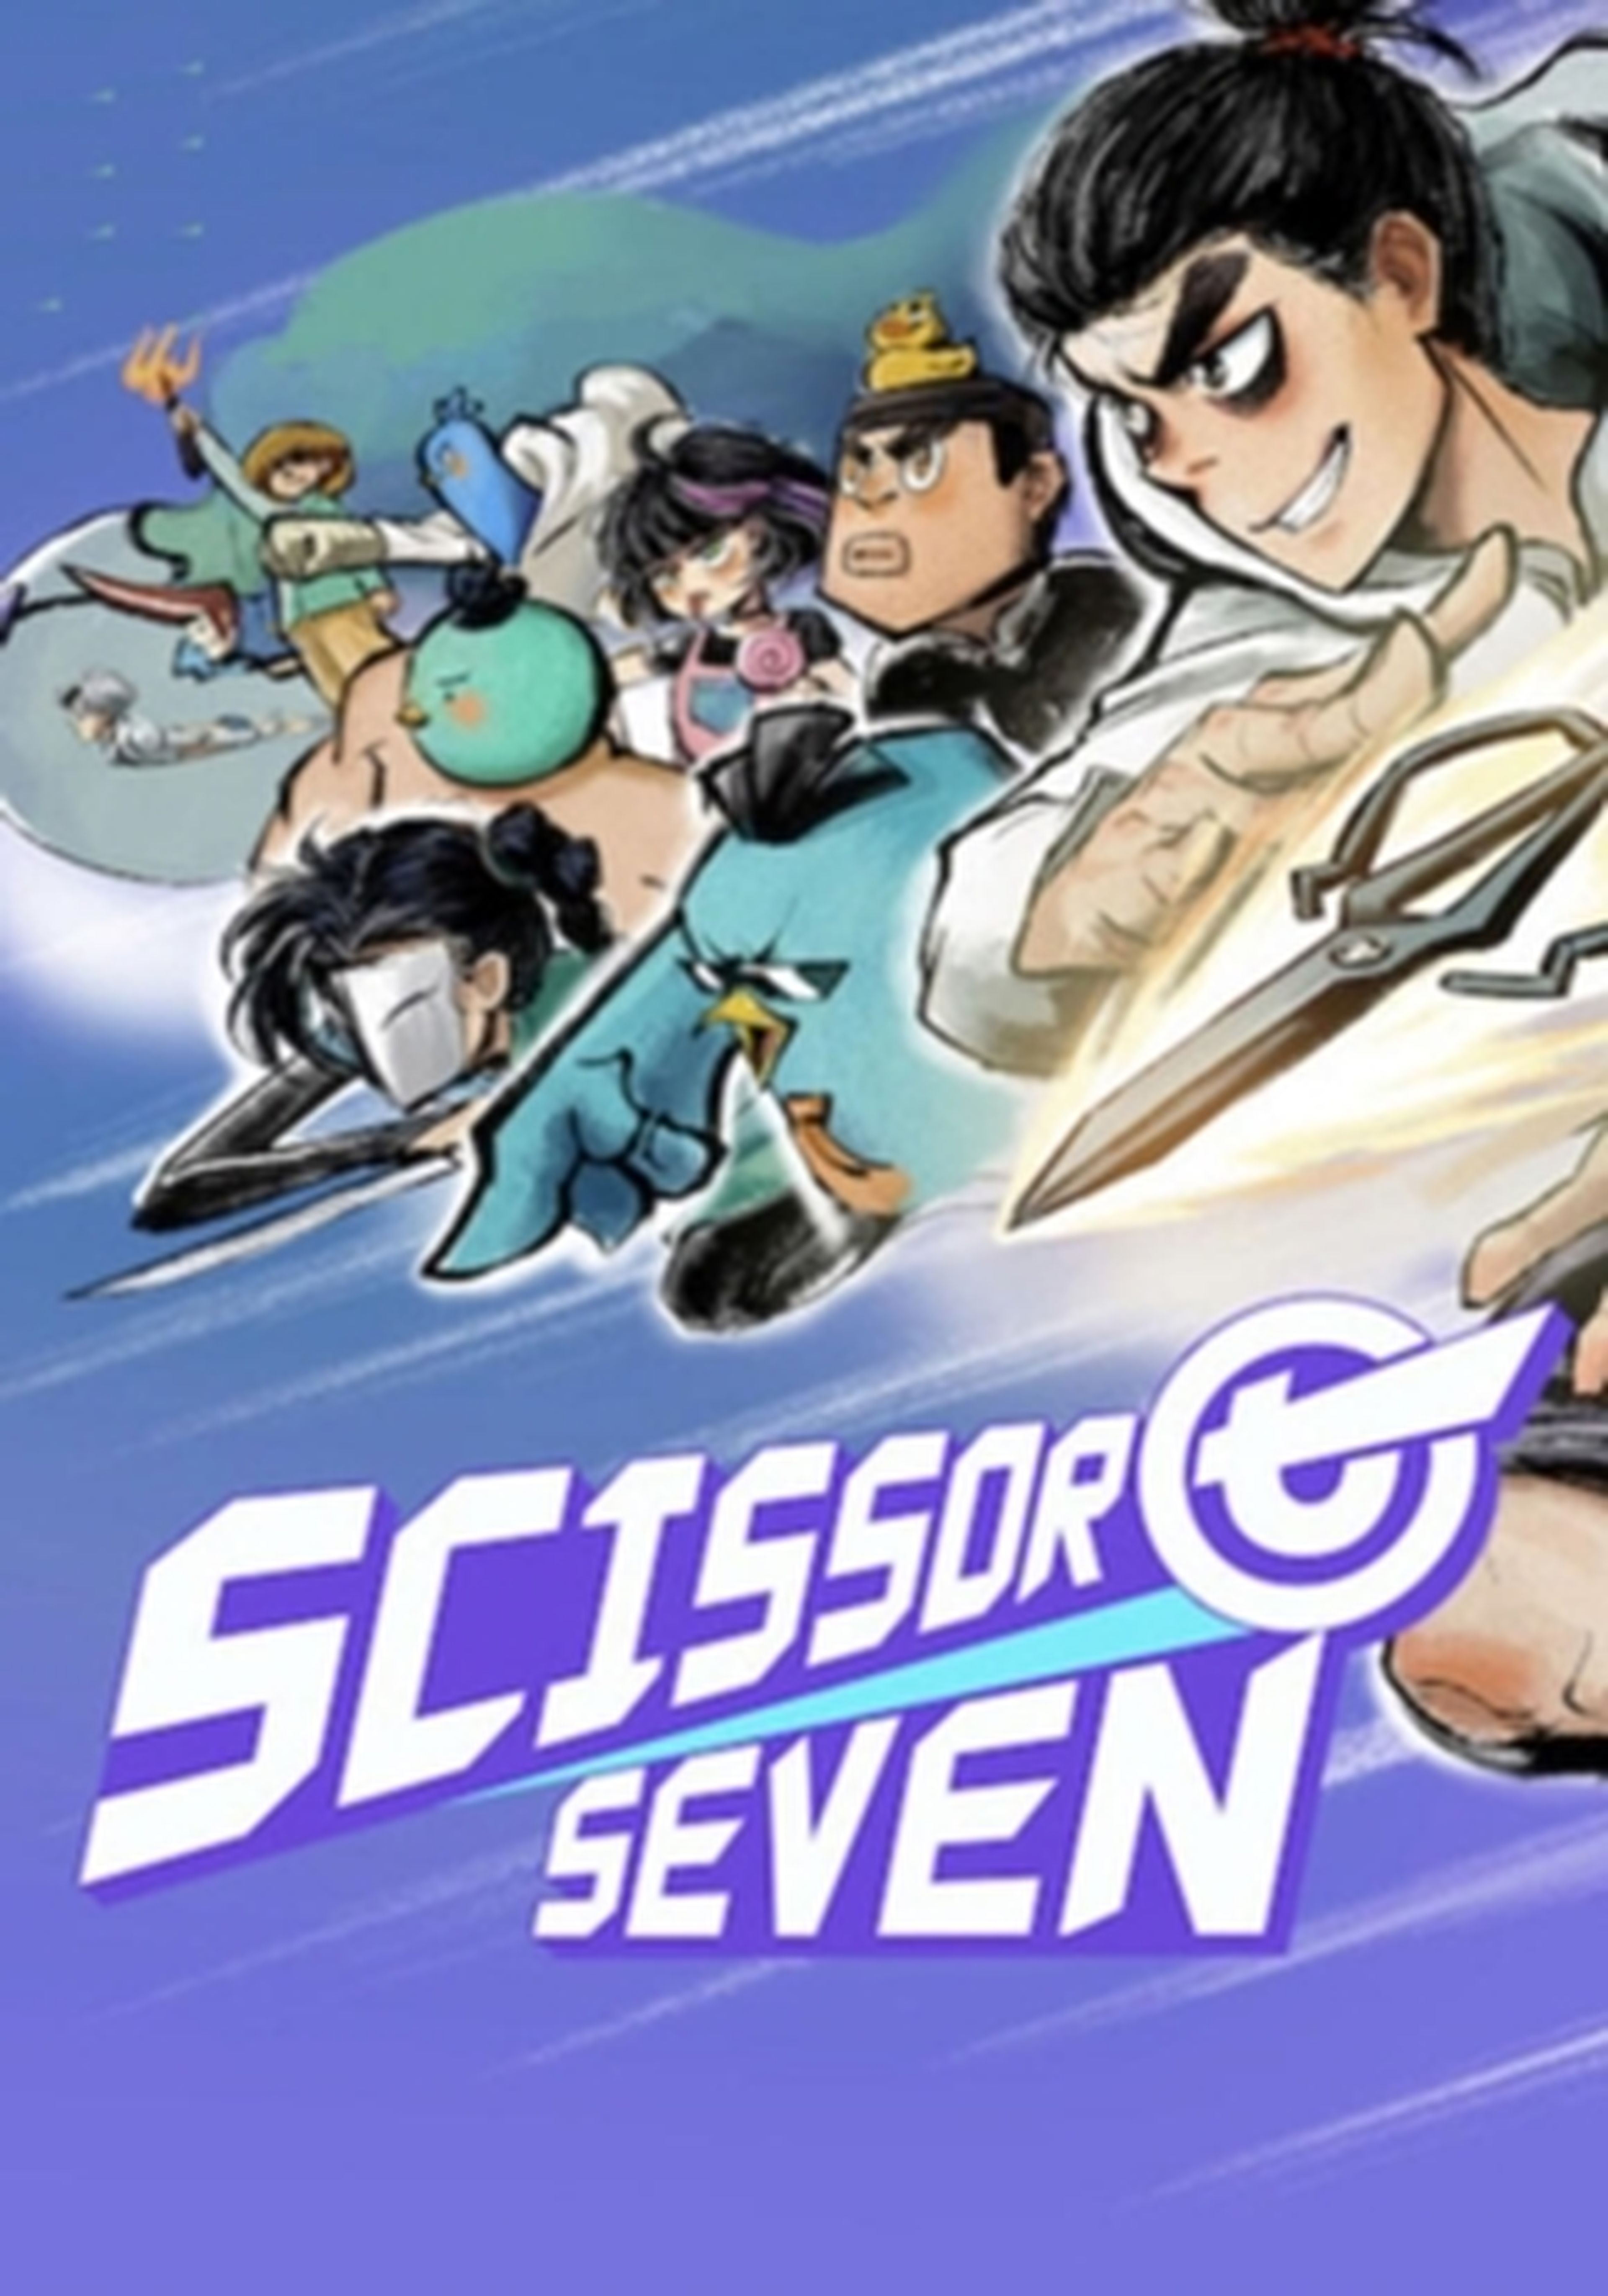 Scissor Seven cartel